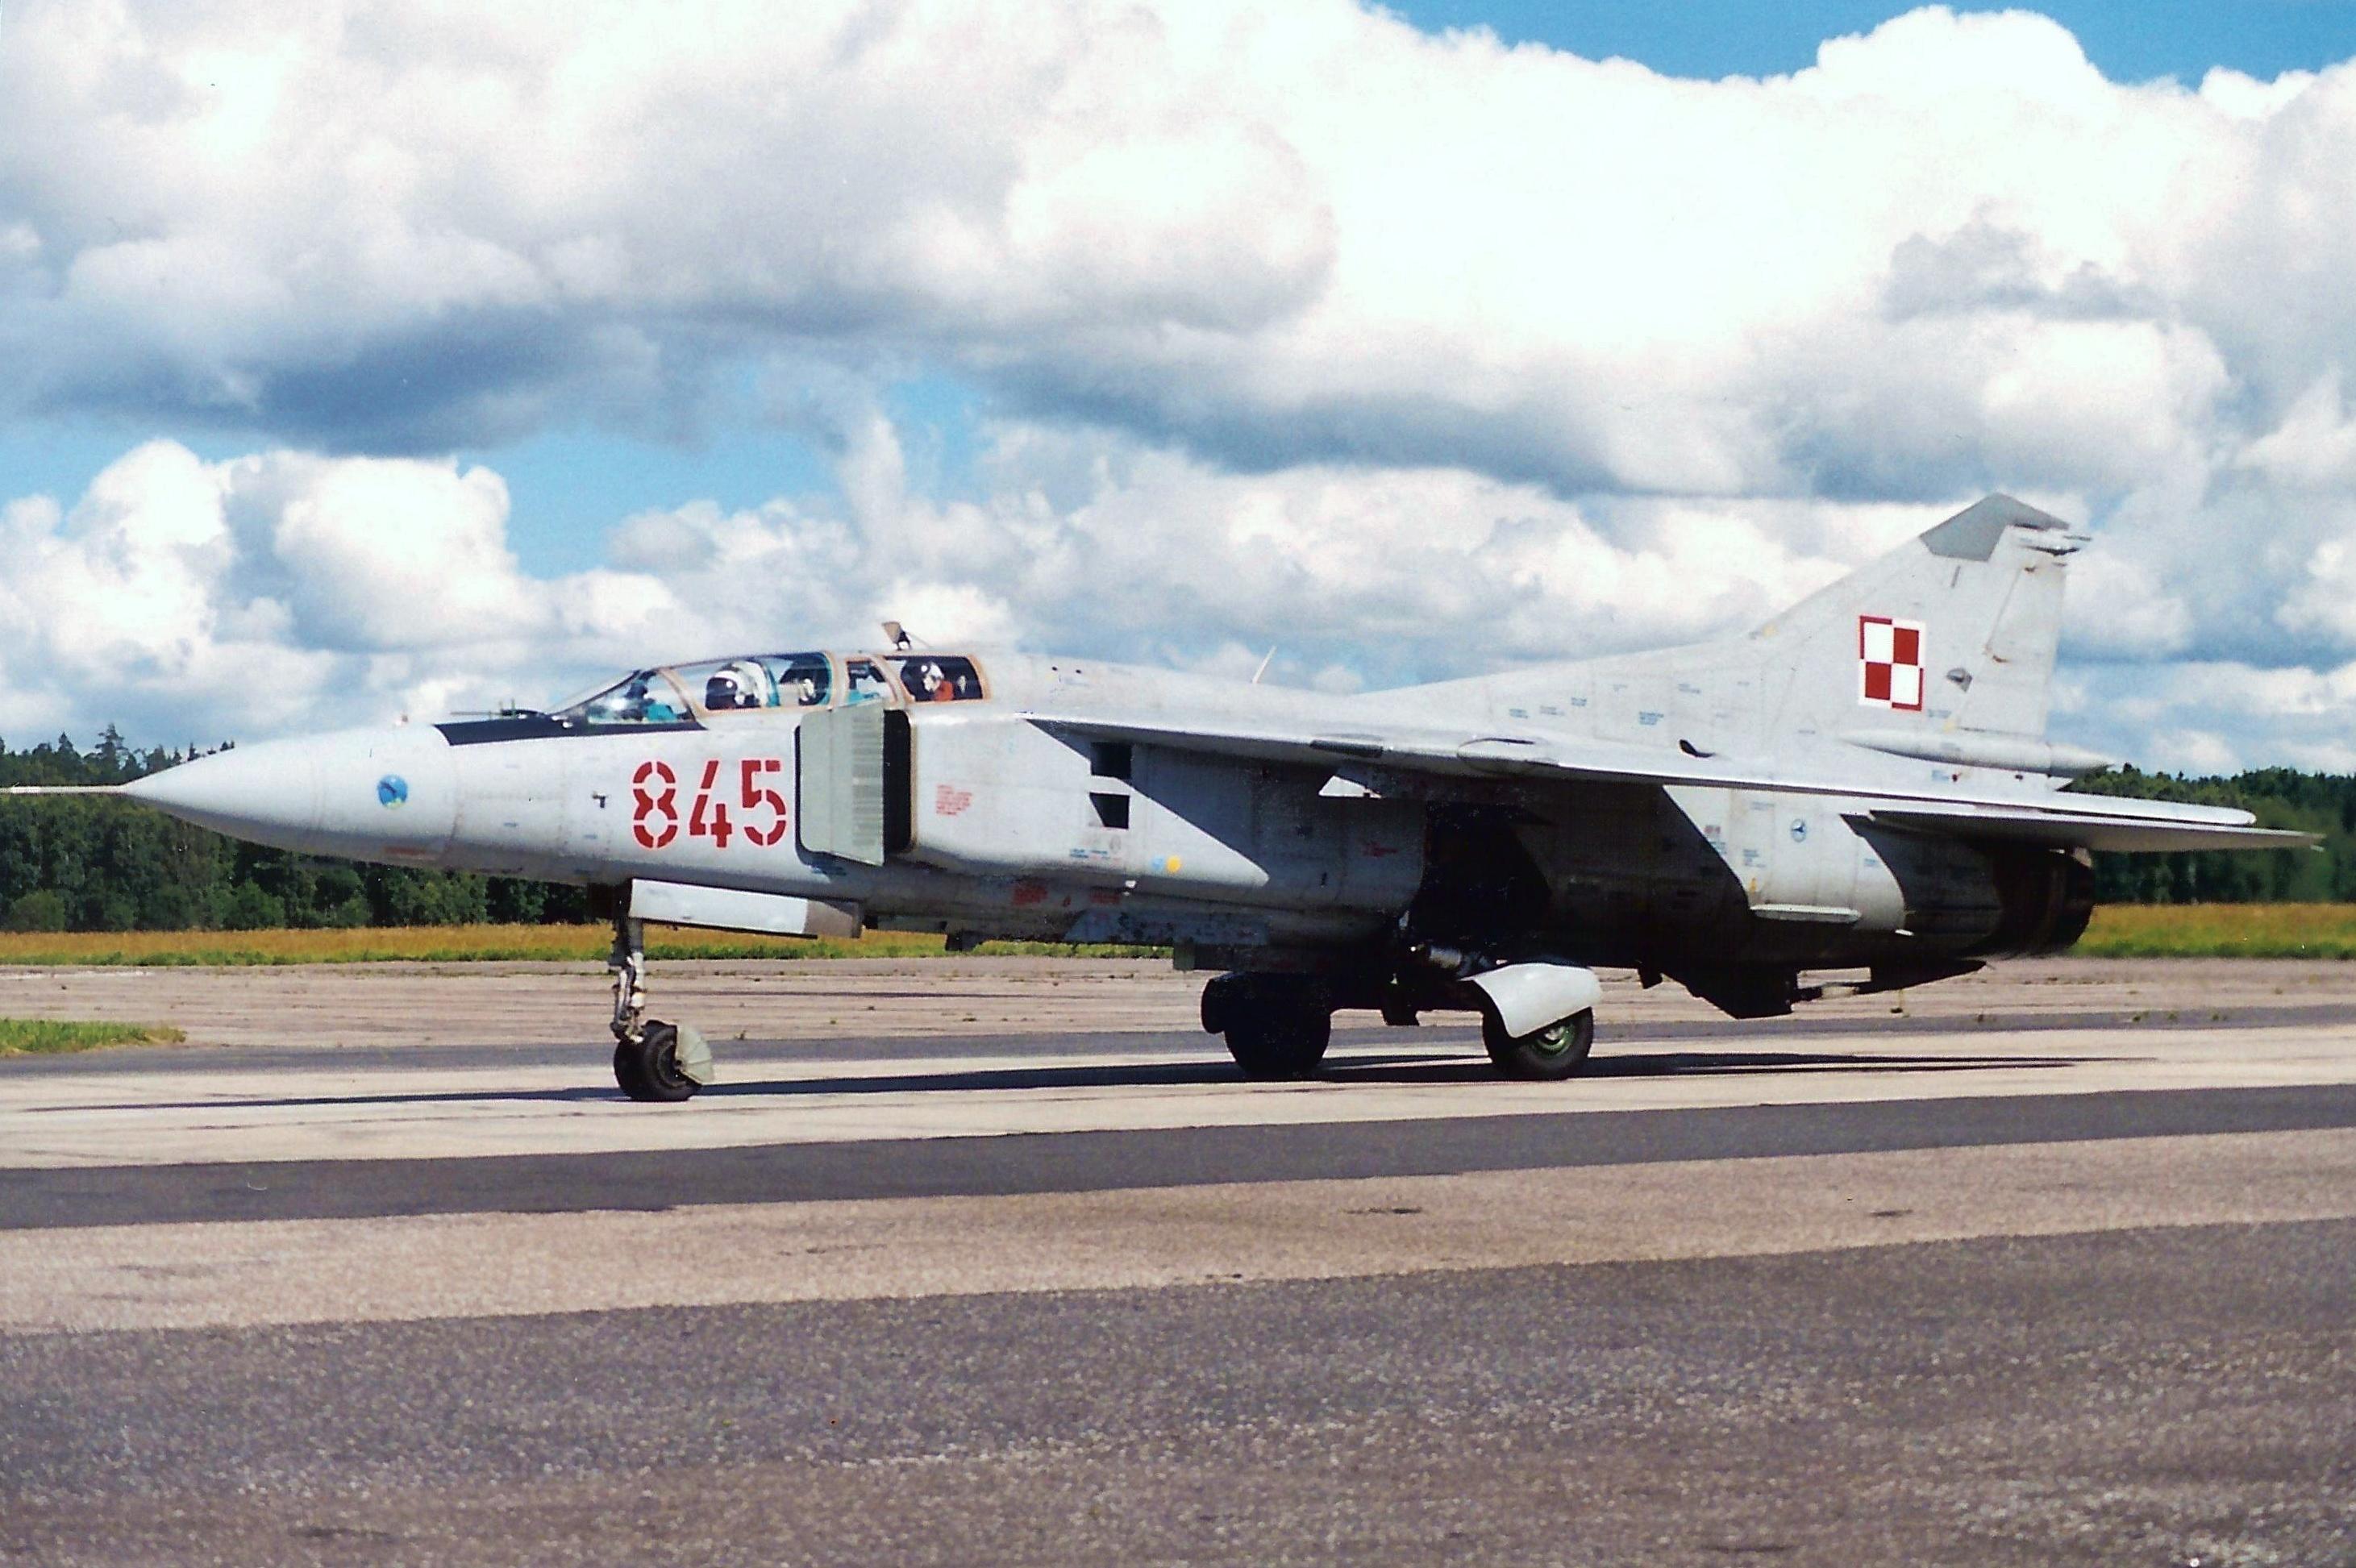 MiG-23UB 845